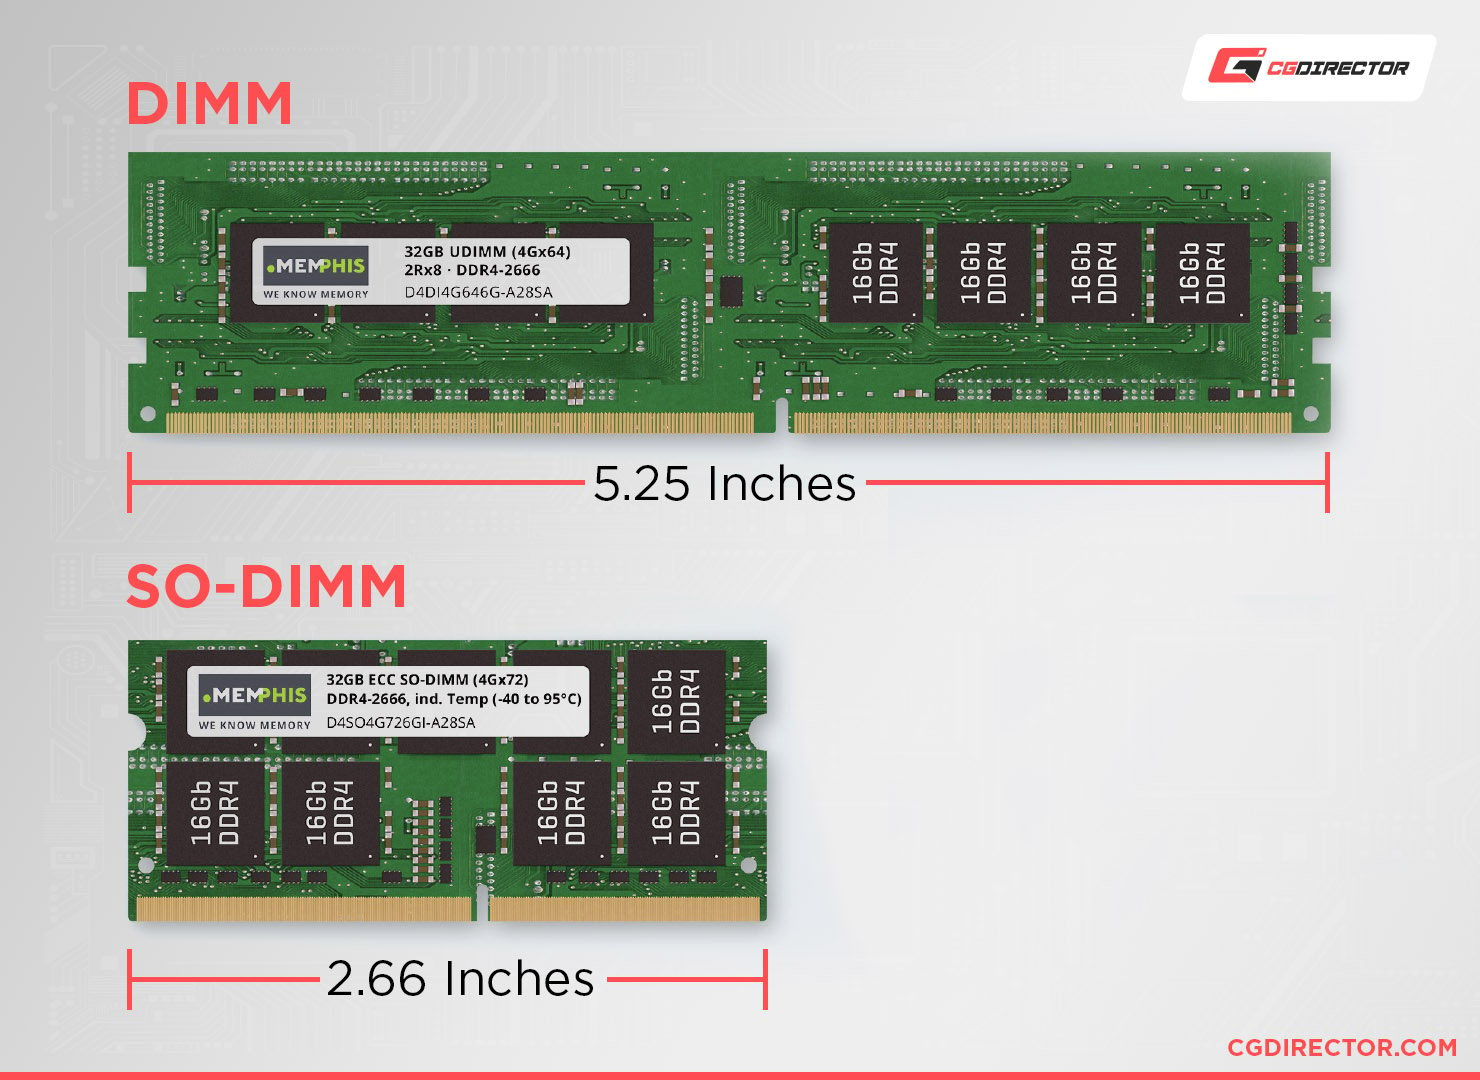 DIMM vs SO-DIMM Size Comparison